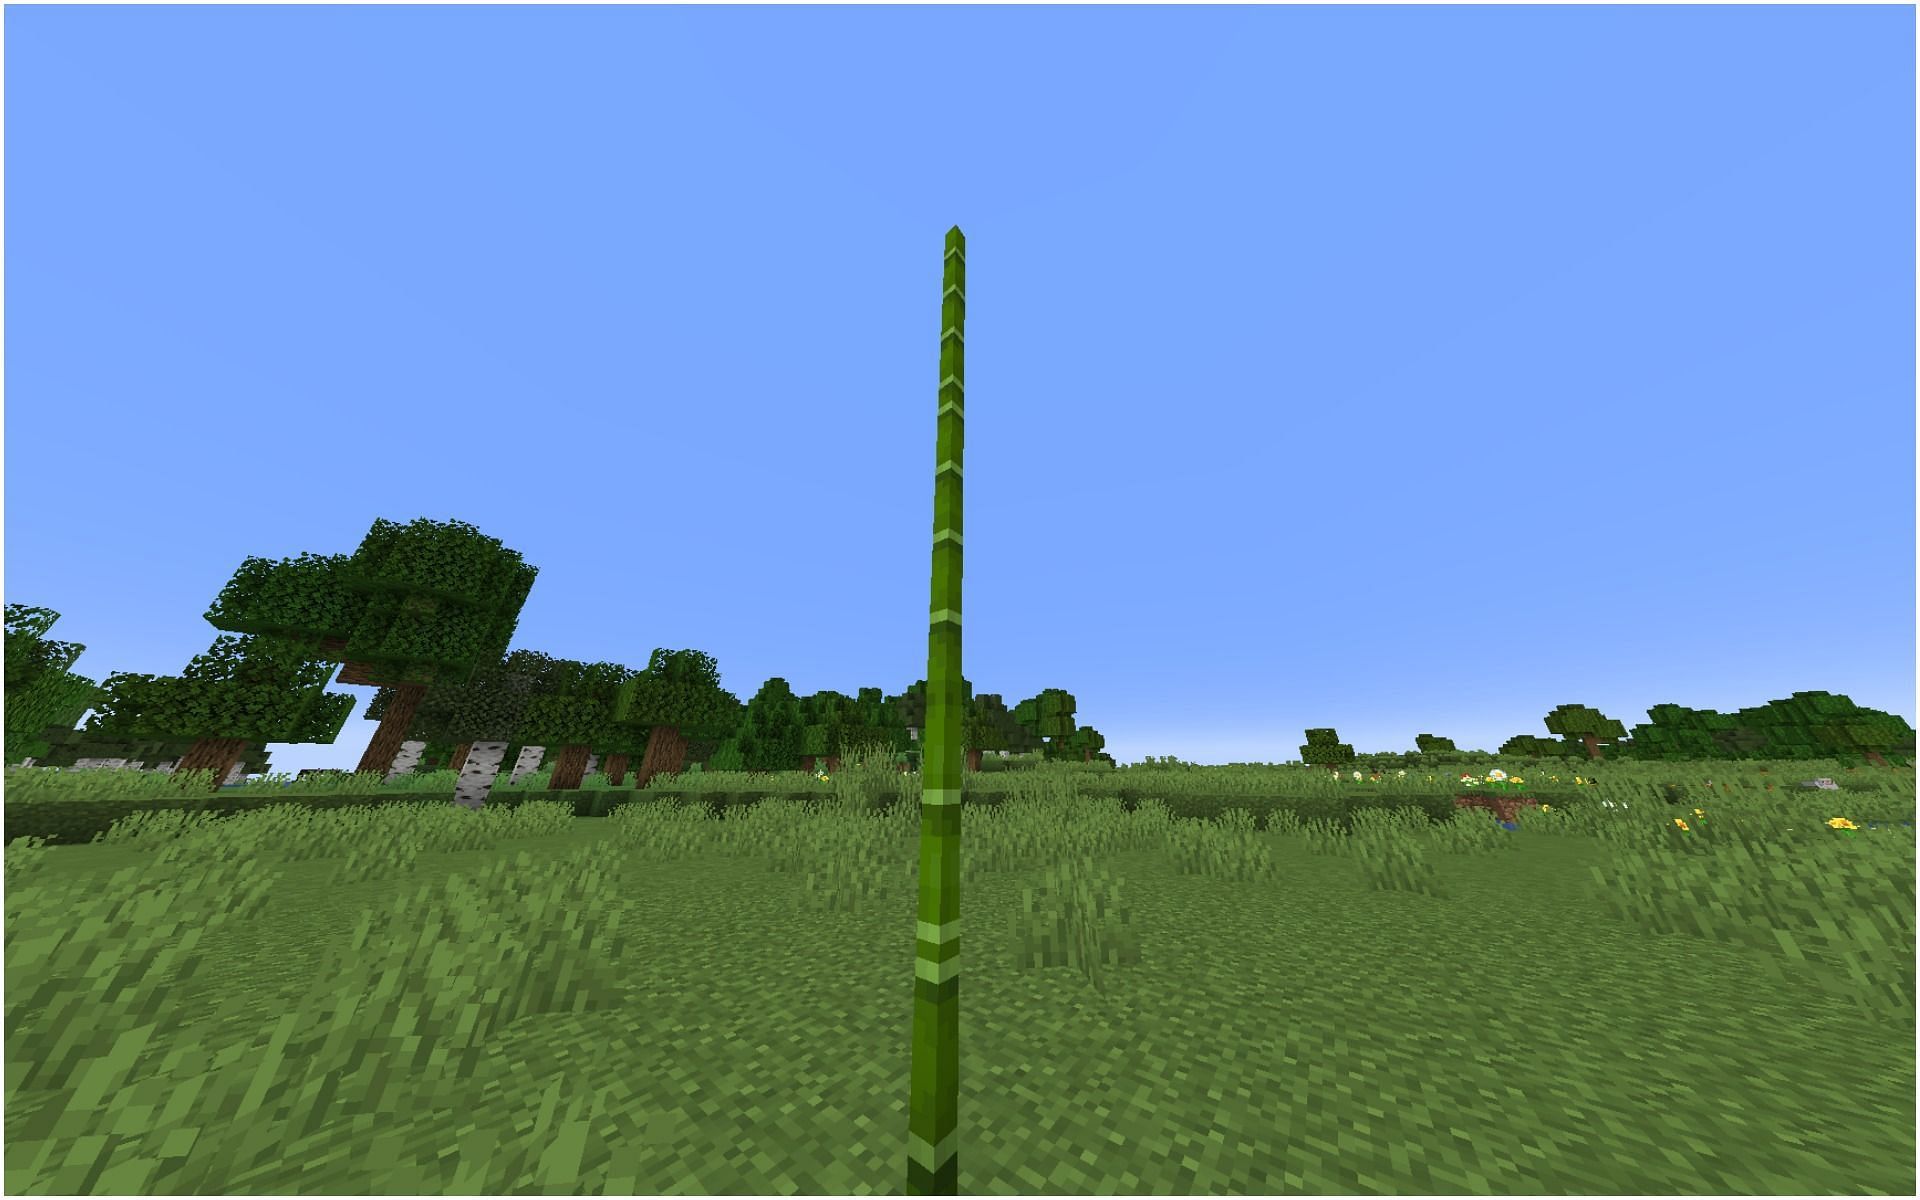 Bamboo in Minecraft (Image via Minecraft)